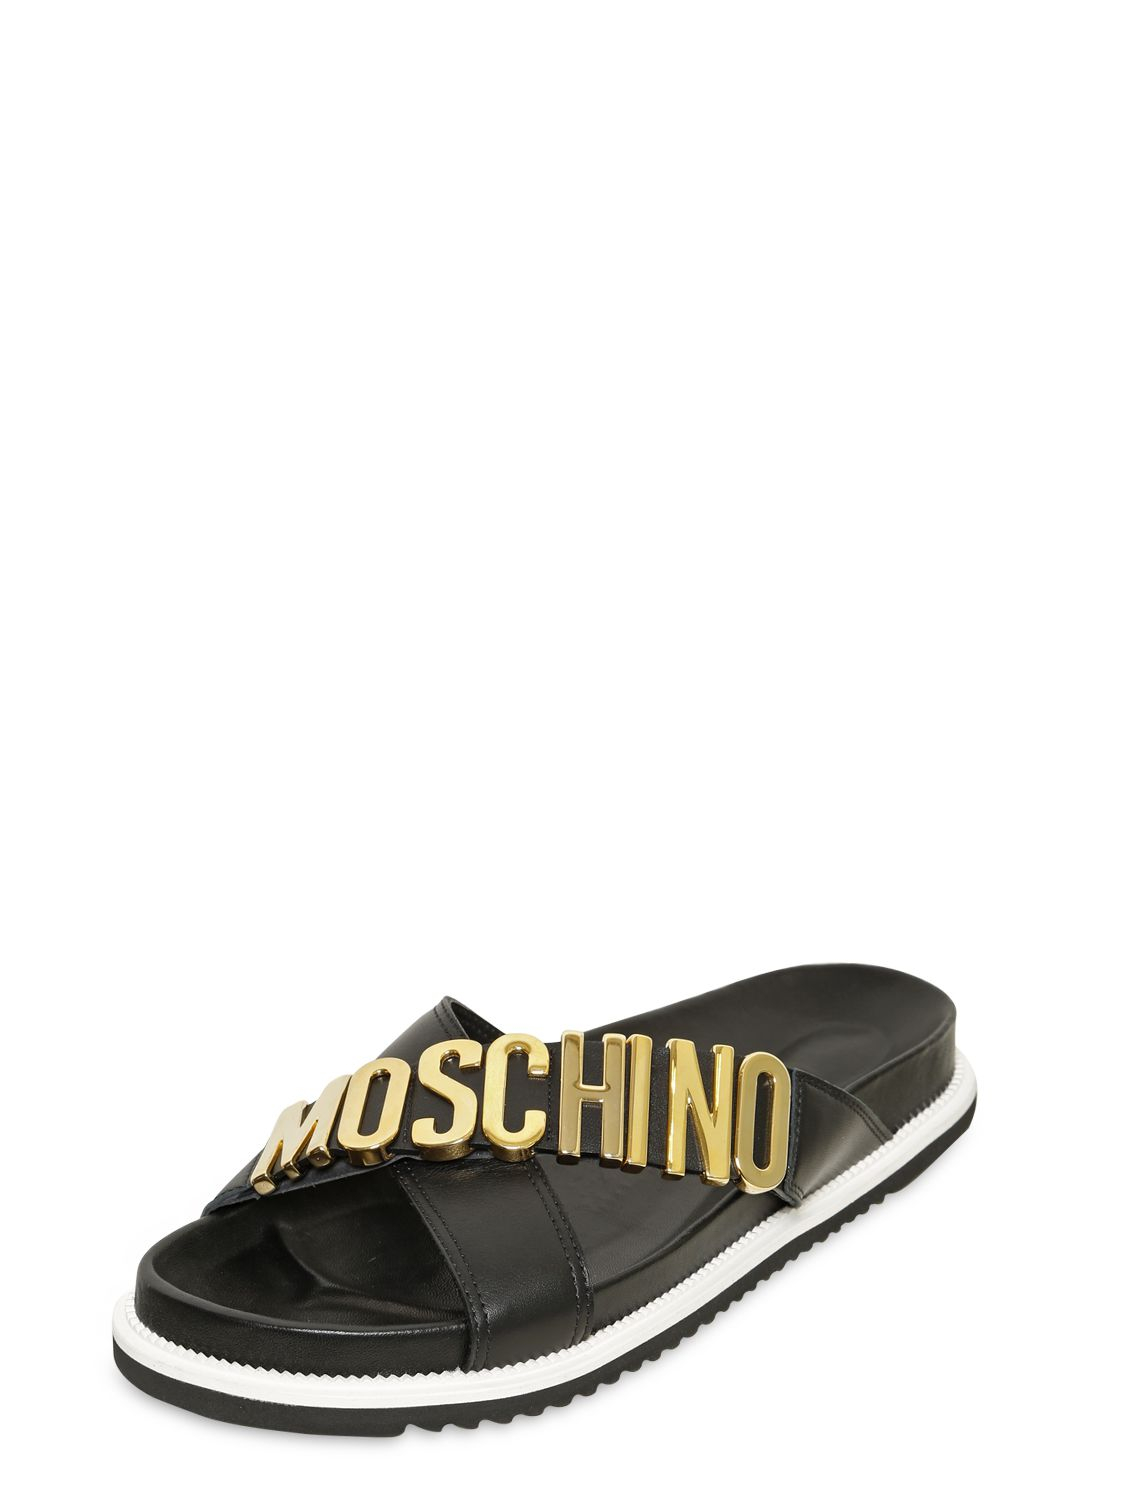 moschino womens sandals off 63% - www 